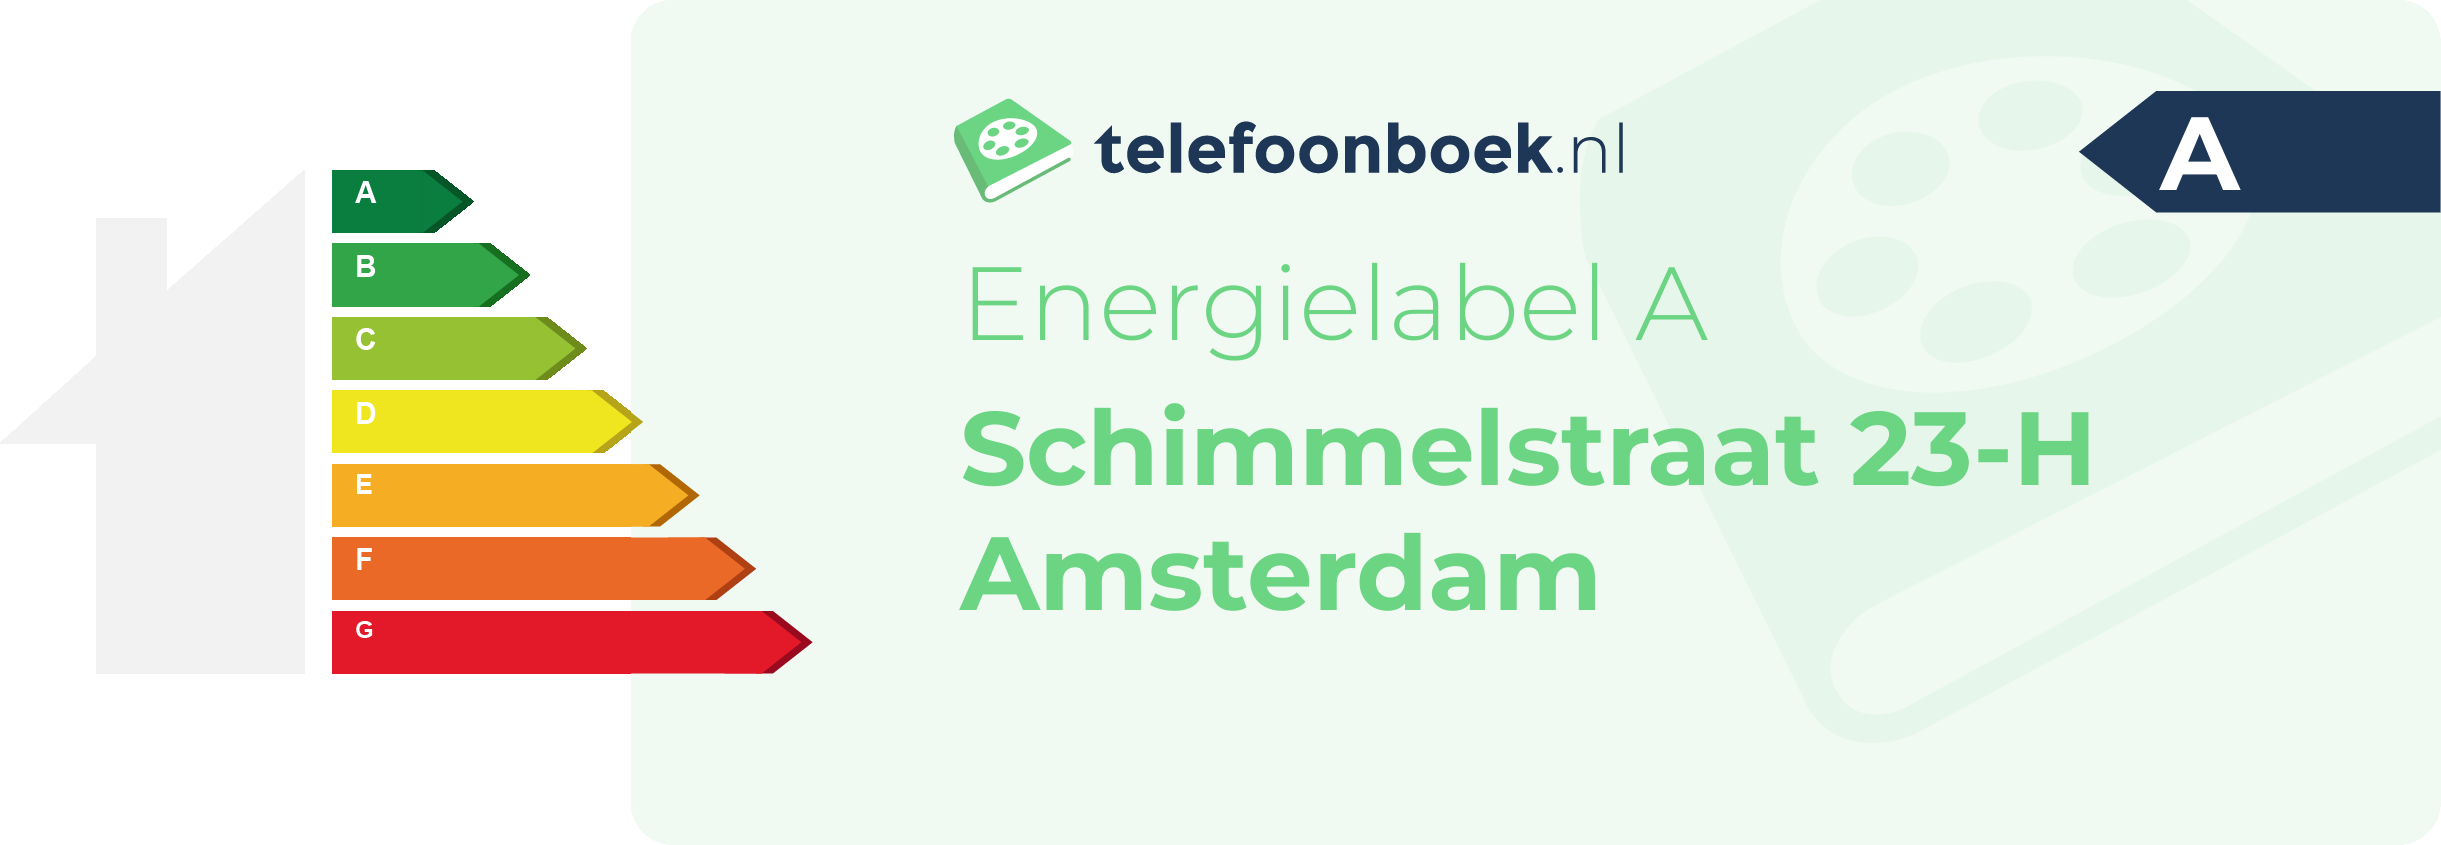 Energielabel Schimmelstraat 23-H Amsterdam